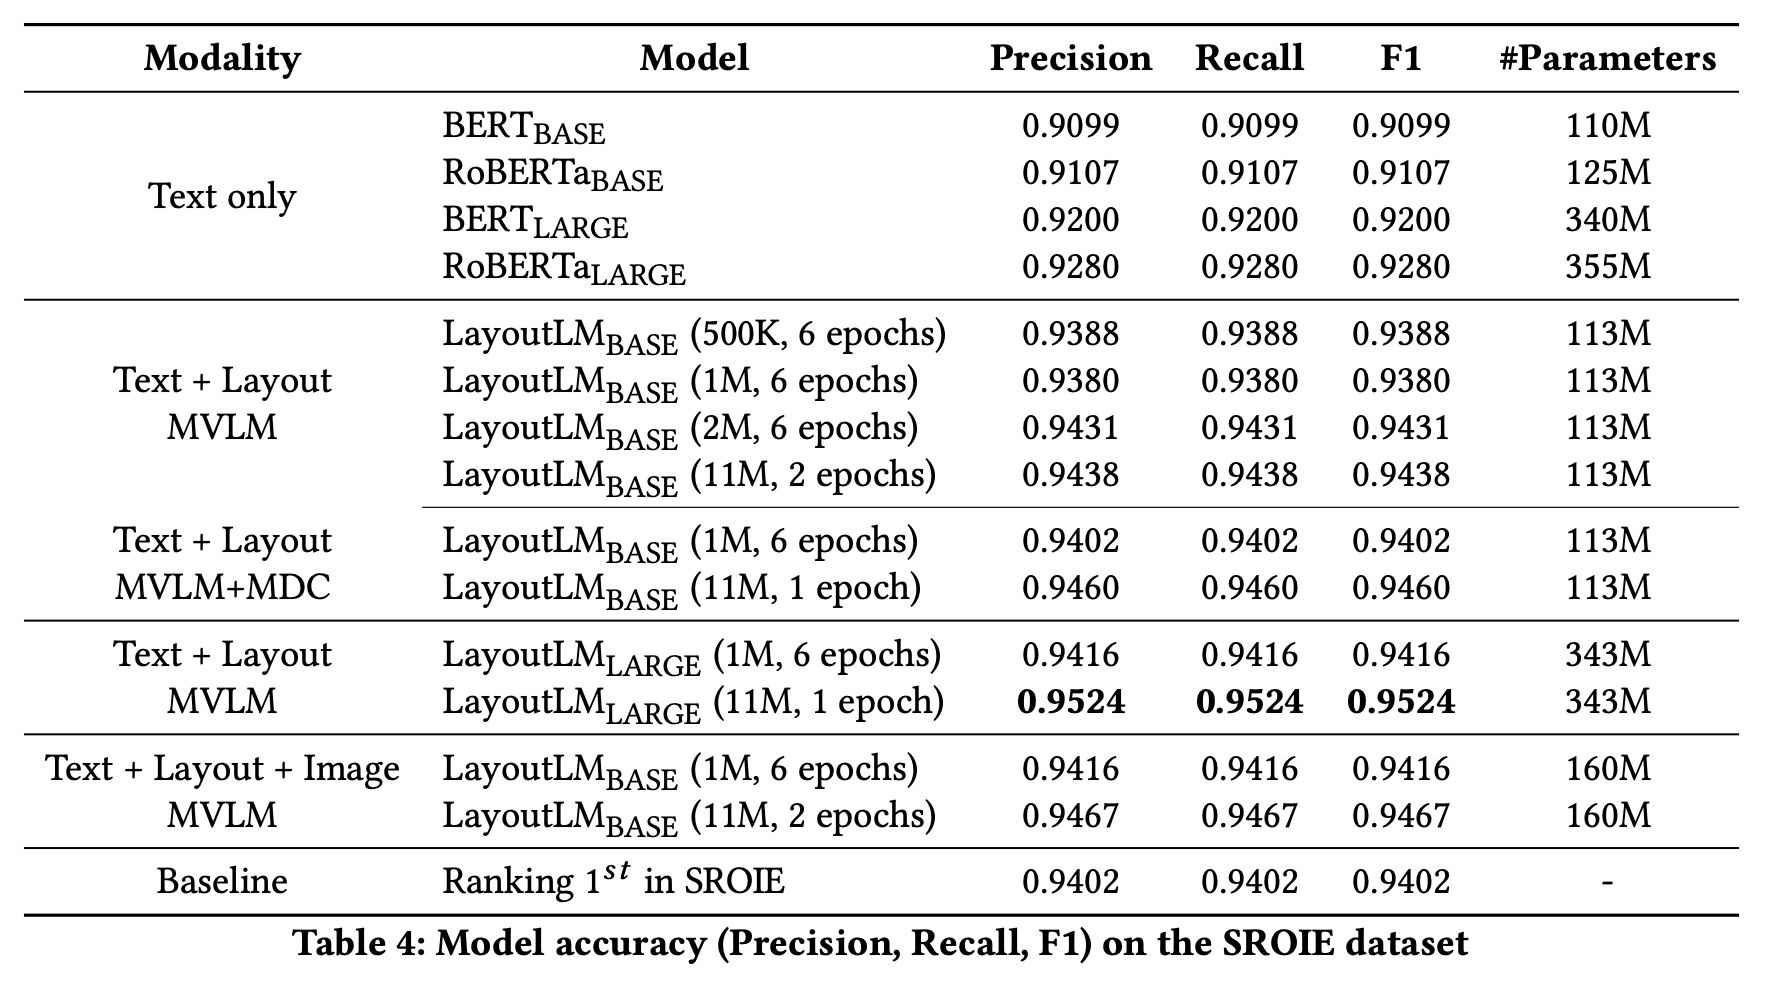 Model accuracy on SROIE